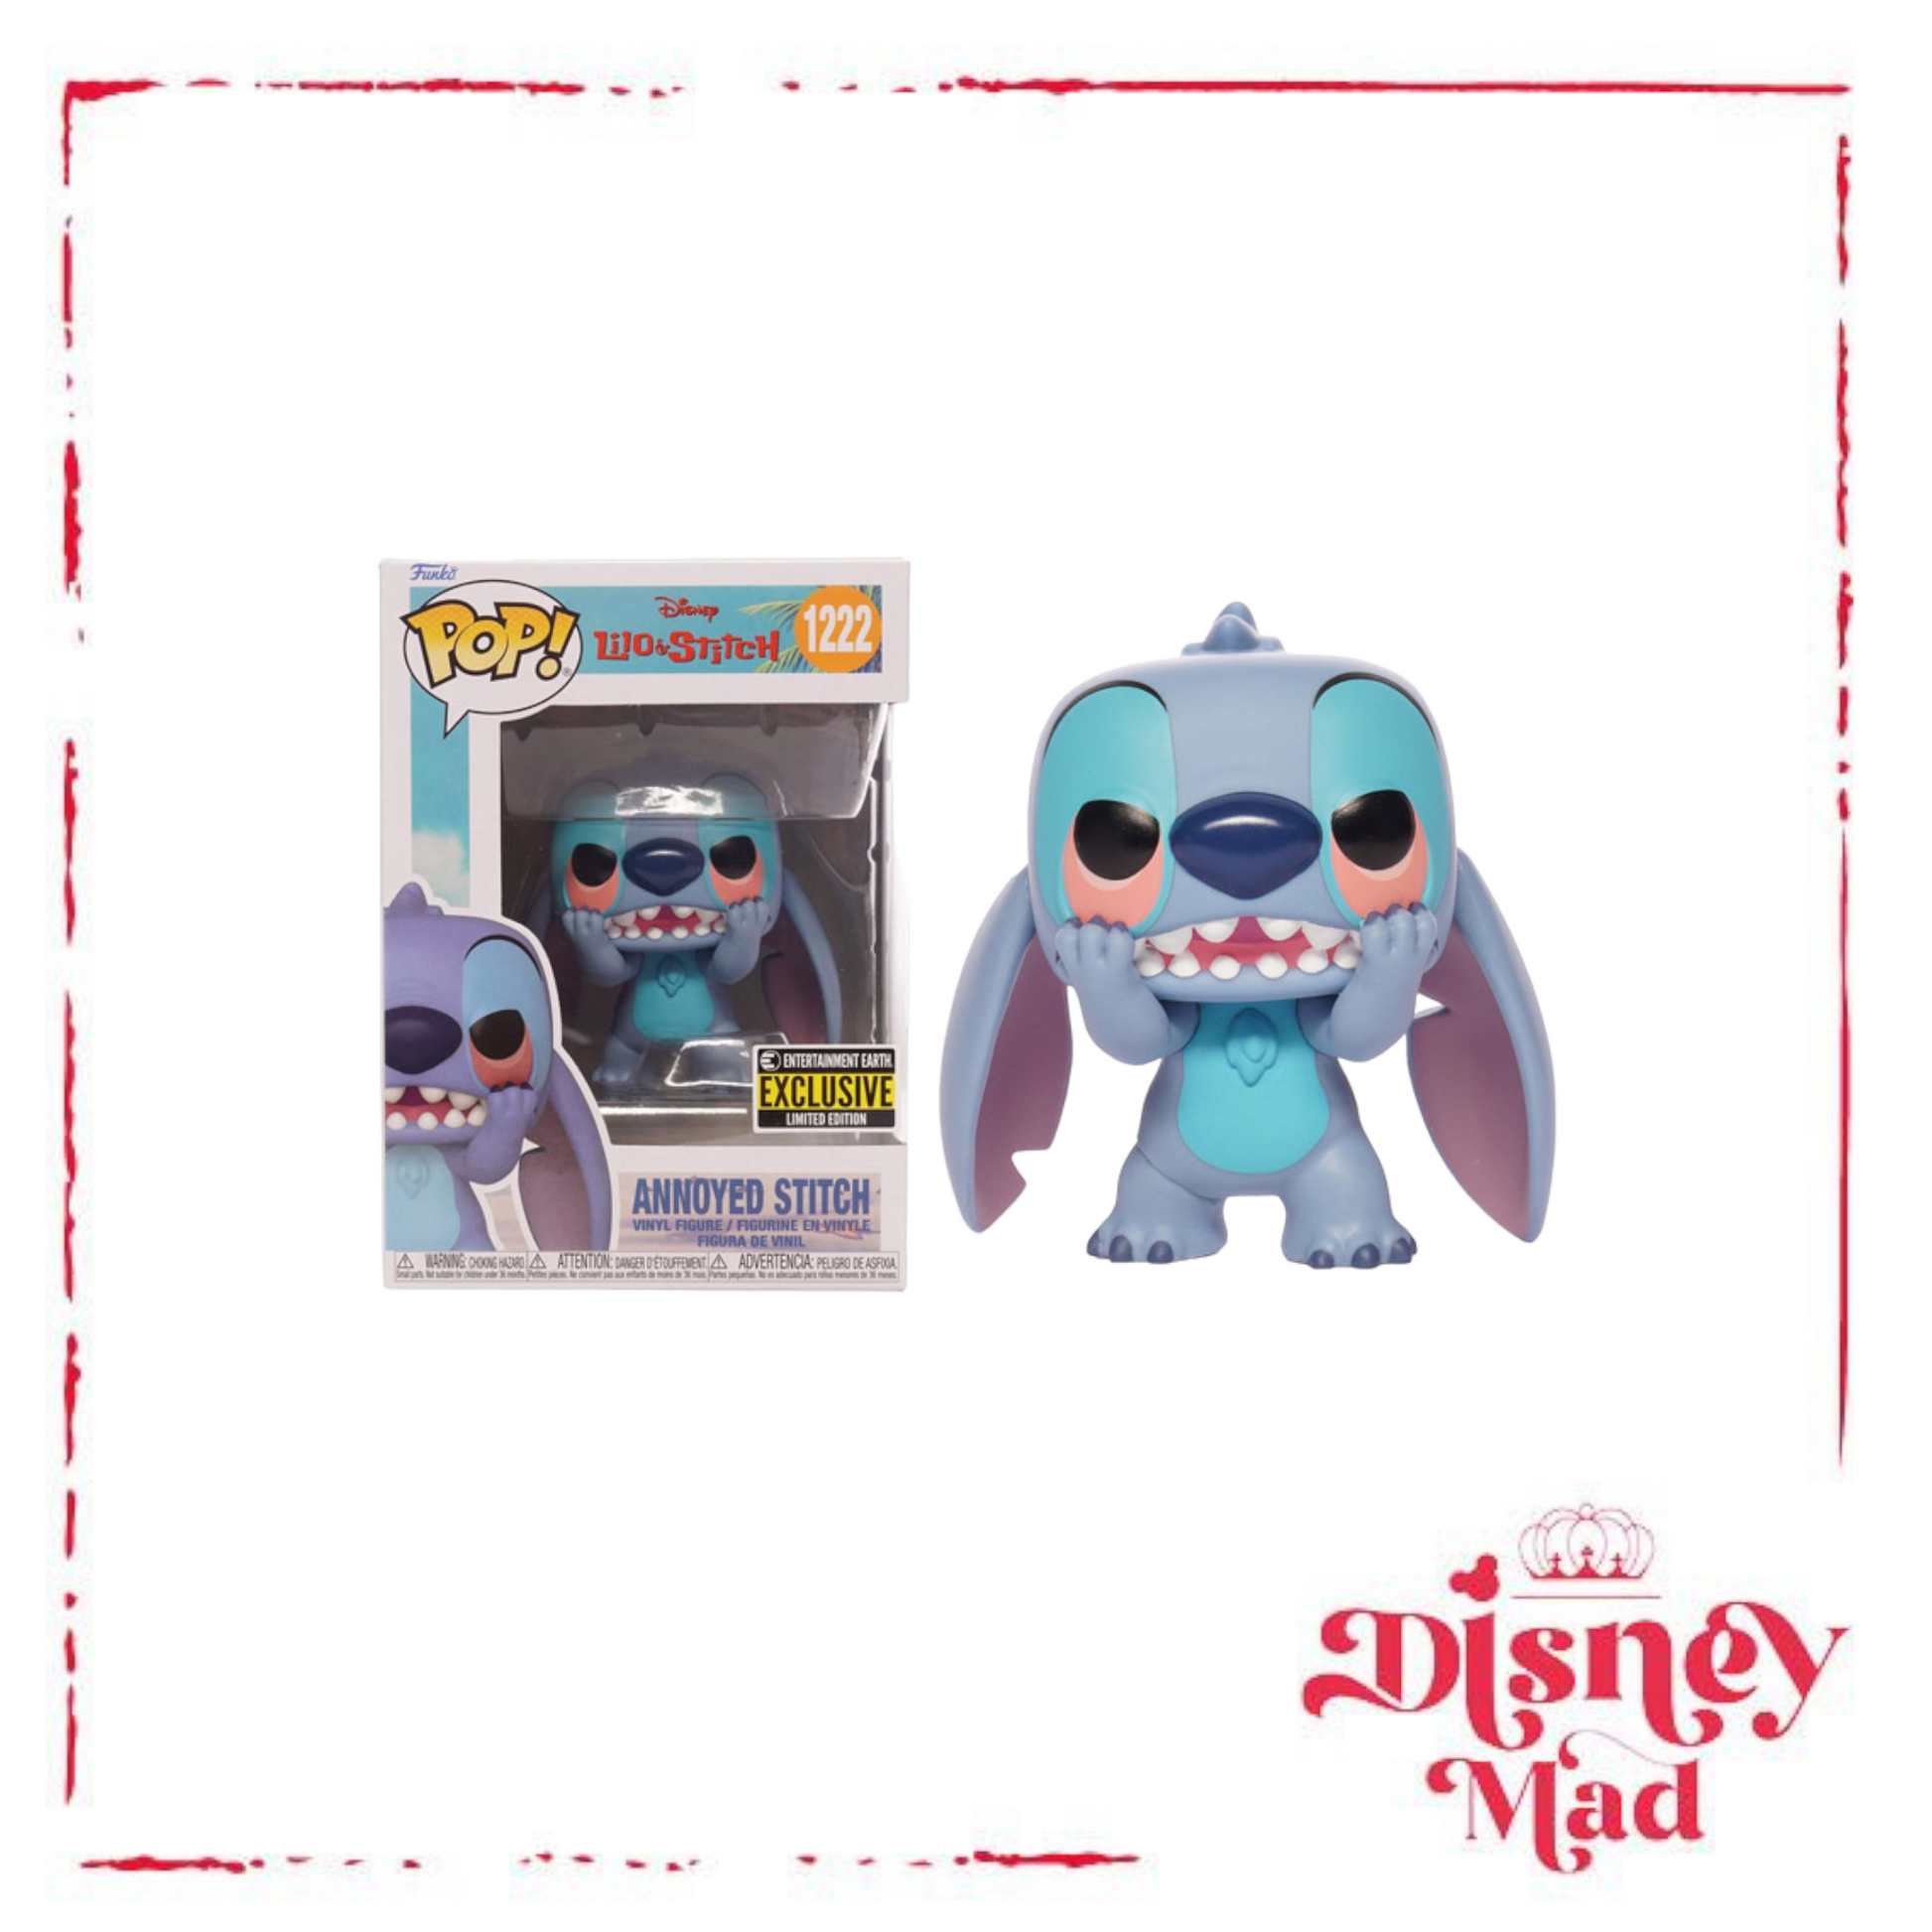 Funko Pop Disney Stitch Figure